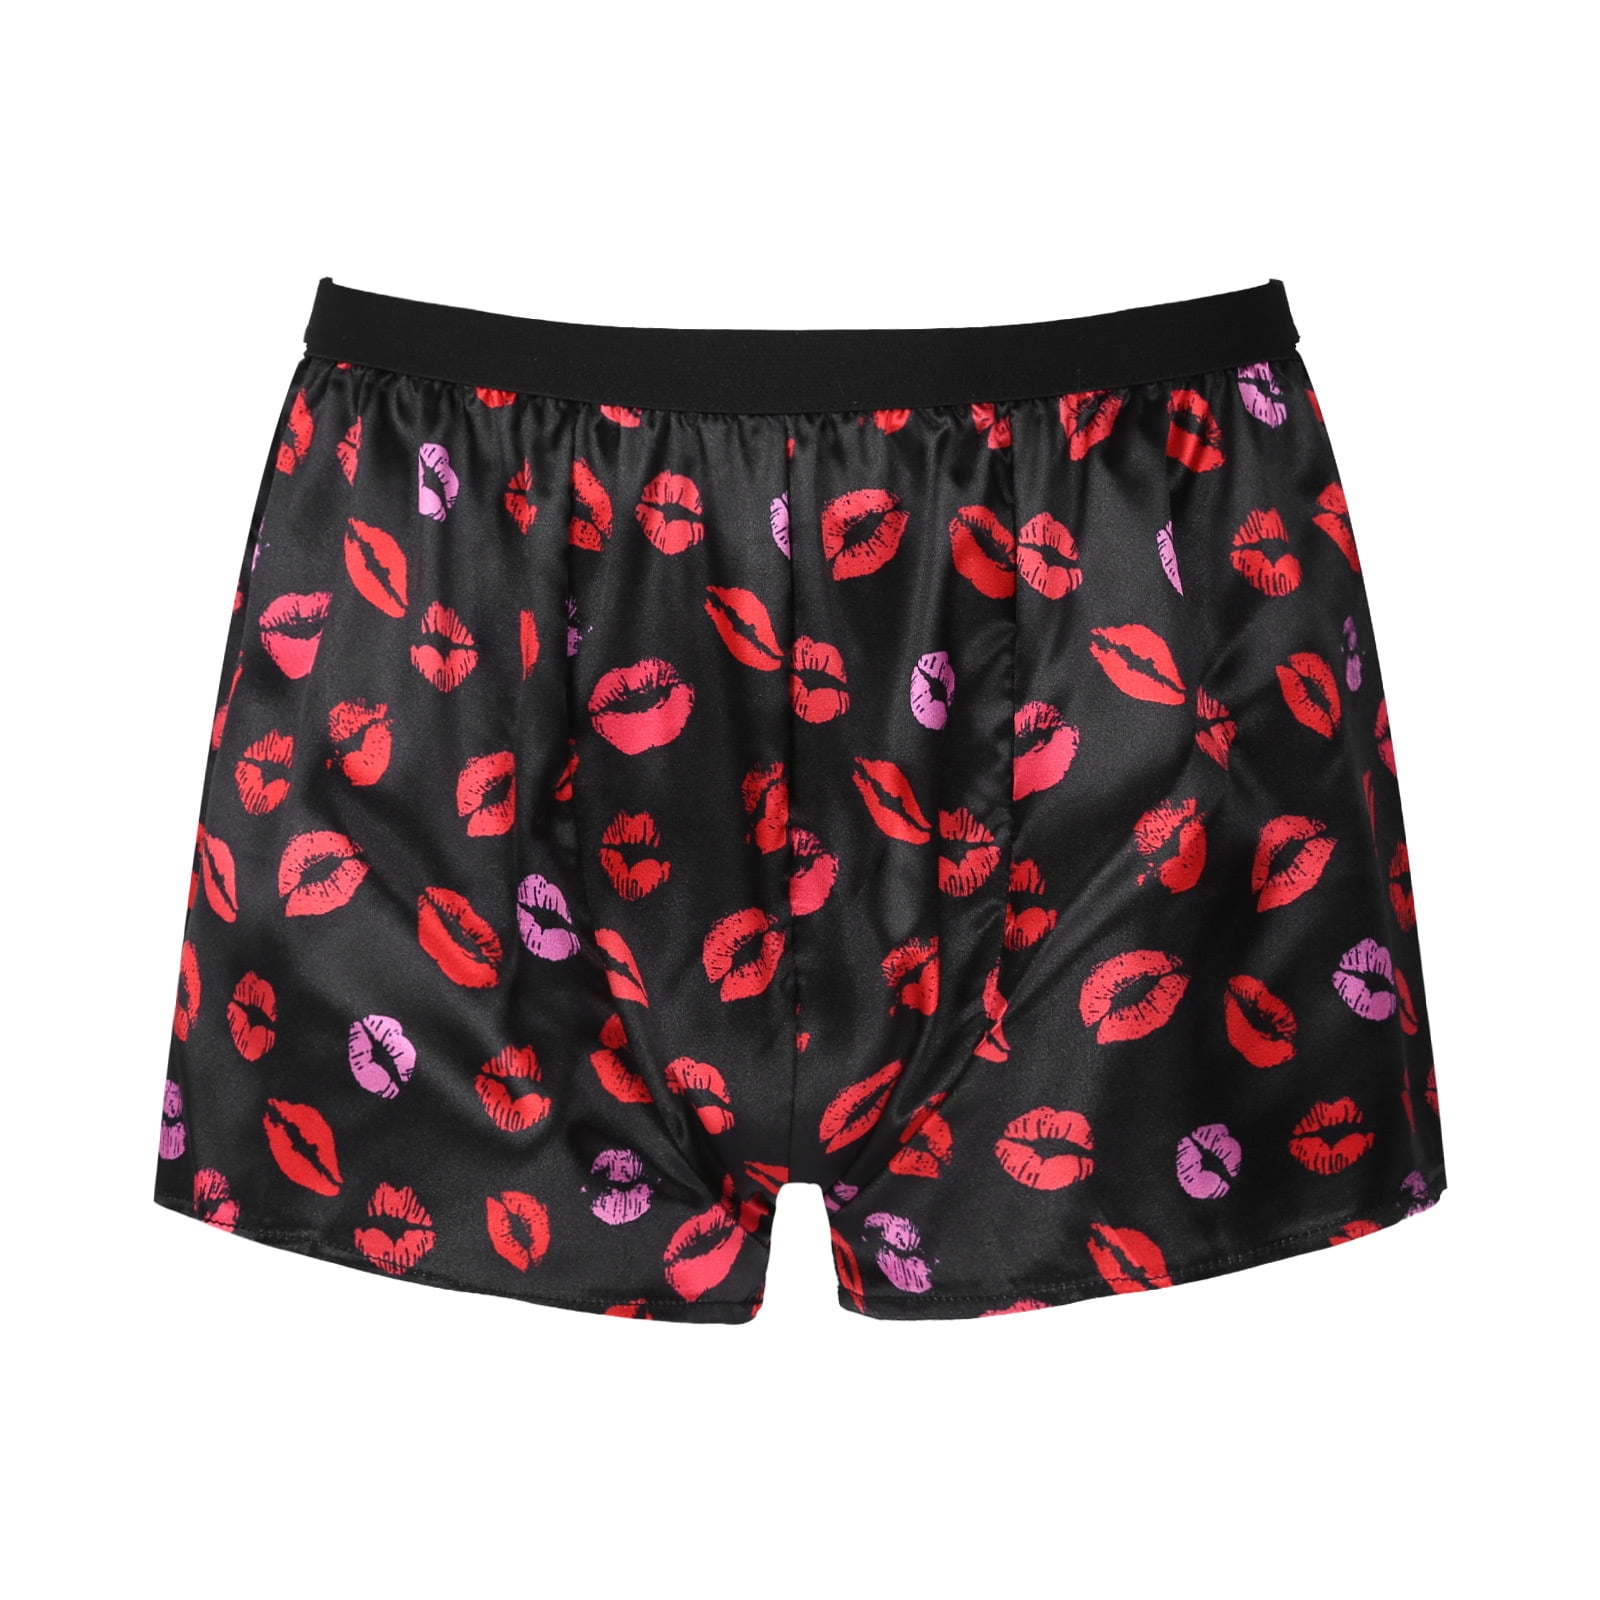 MSemis Men's Silky Satin Boxers Shorts Summer Lounge Underwear Lingerie ...